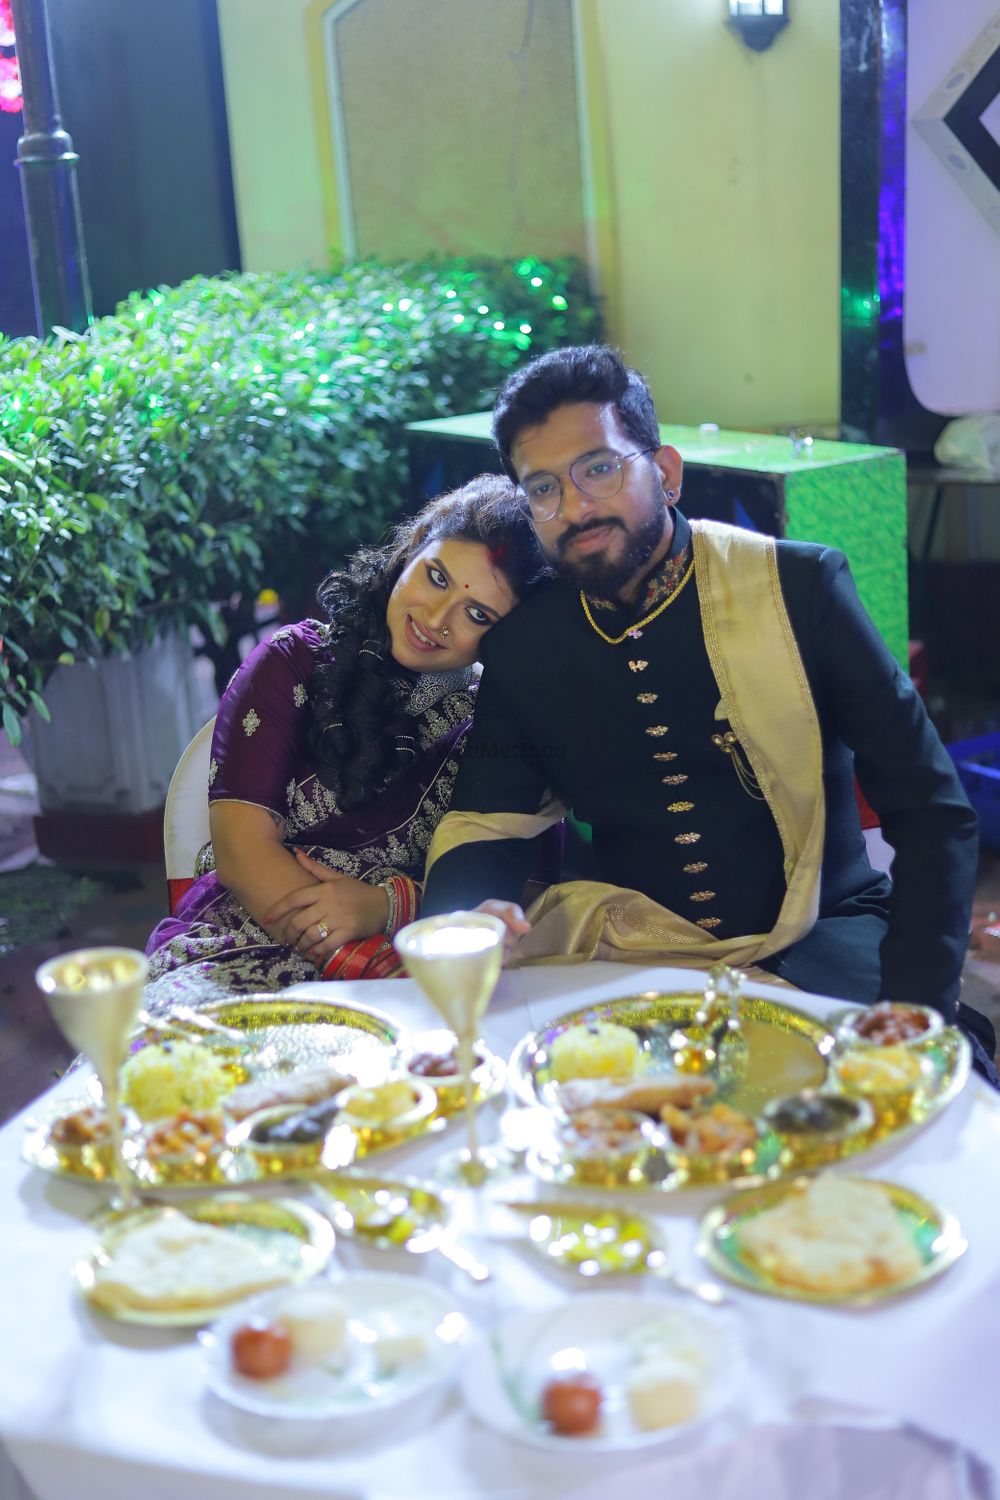 Photo From Special Dinner arranged with golden plate Bride & Groom - Luxury Bengali Wedding-"ব্ল্যাক ডায়মন্ড ক্যাটারার" - By Black Diamond Caterer